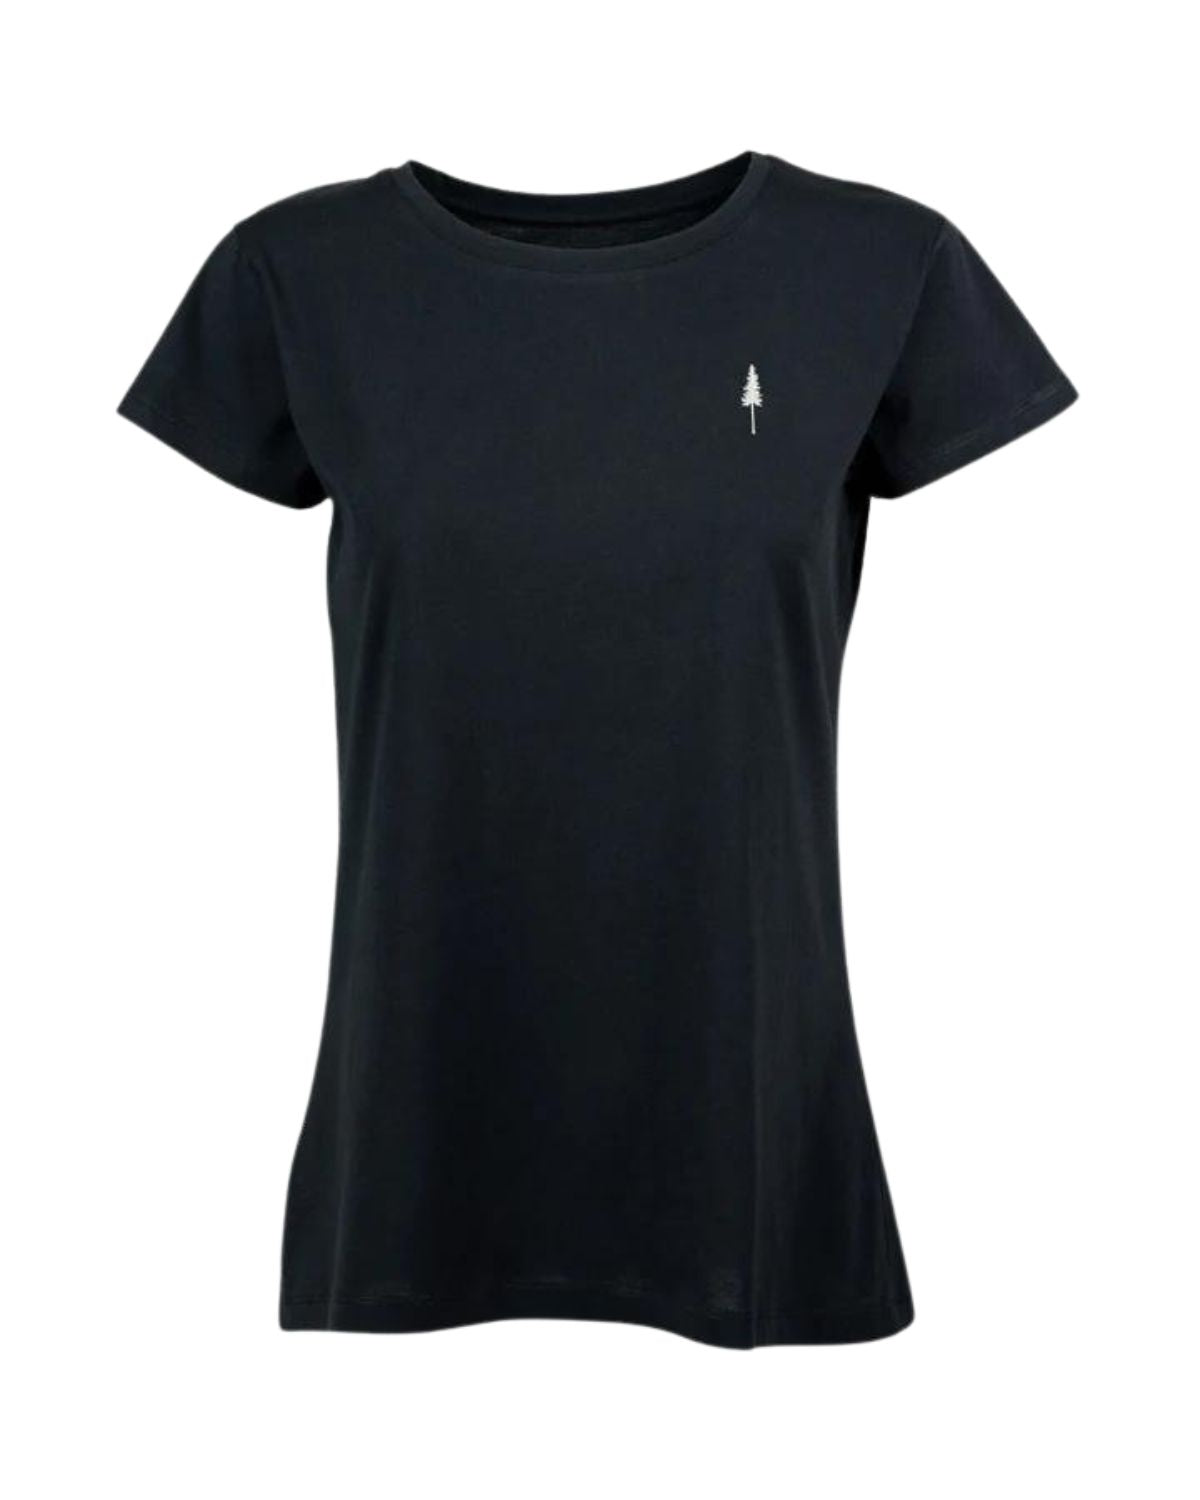 Treeshirt black - T-Shirt Damen